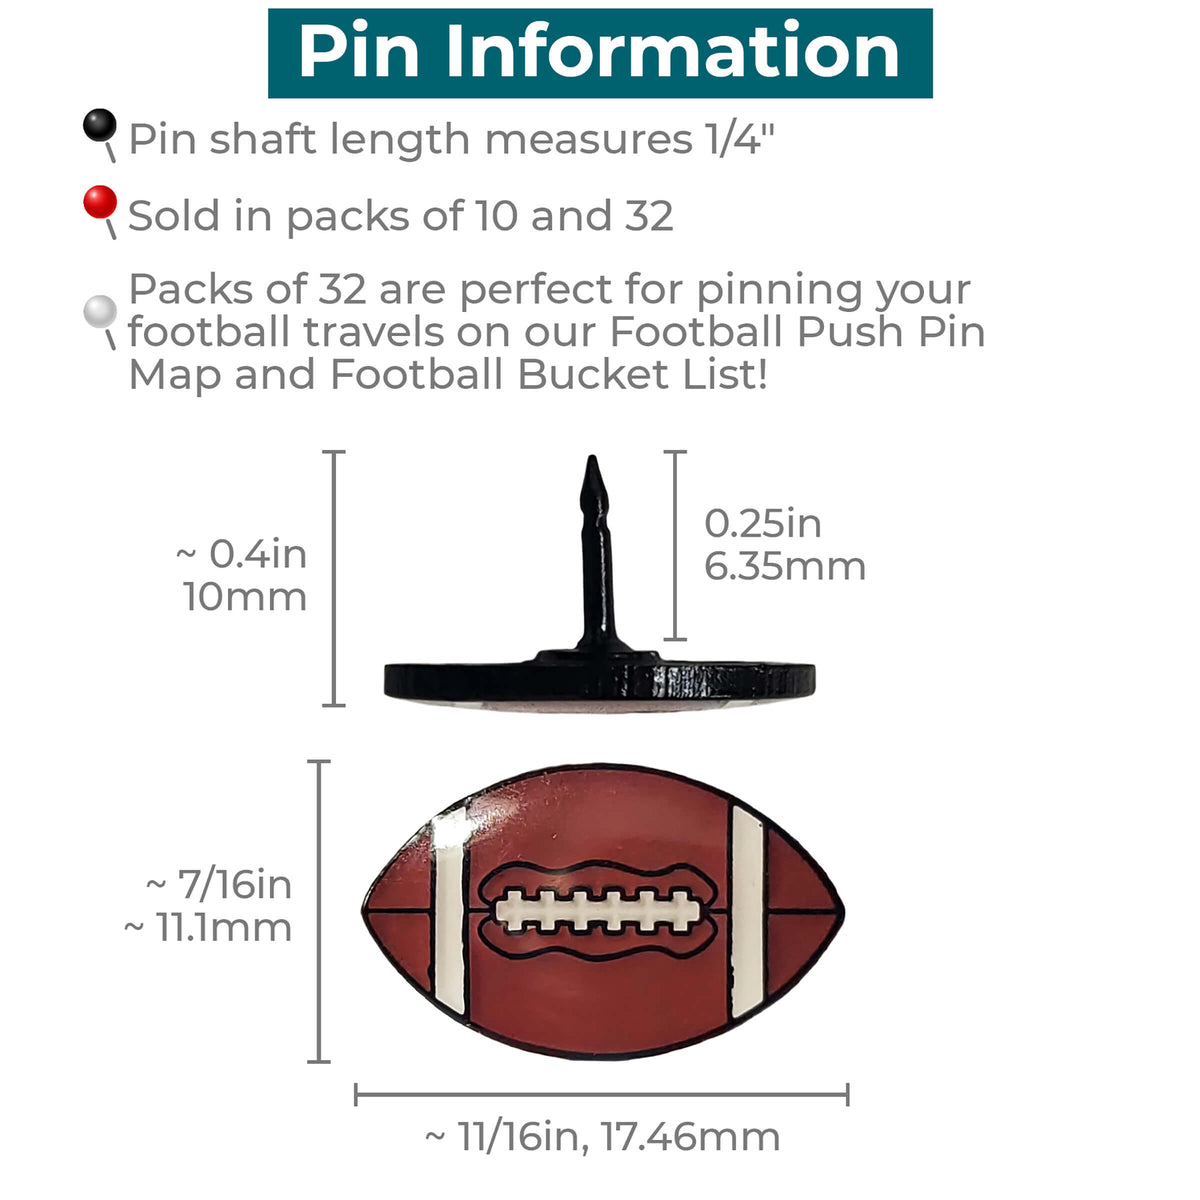 Dimensions of Football Shaped Push Pins